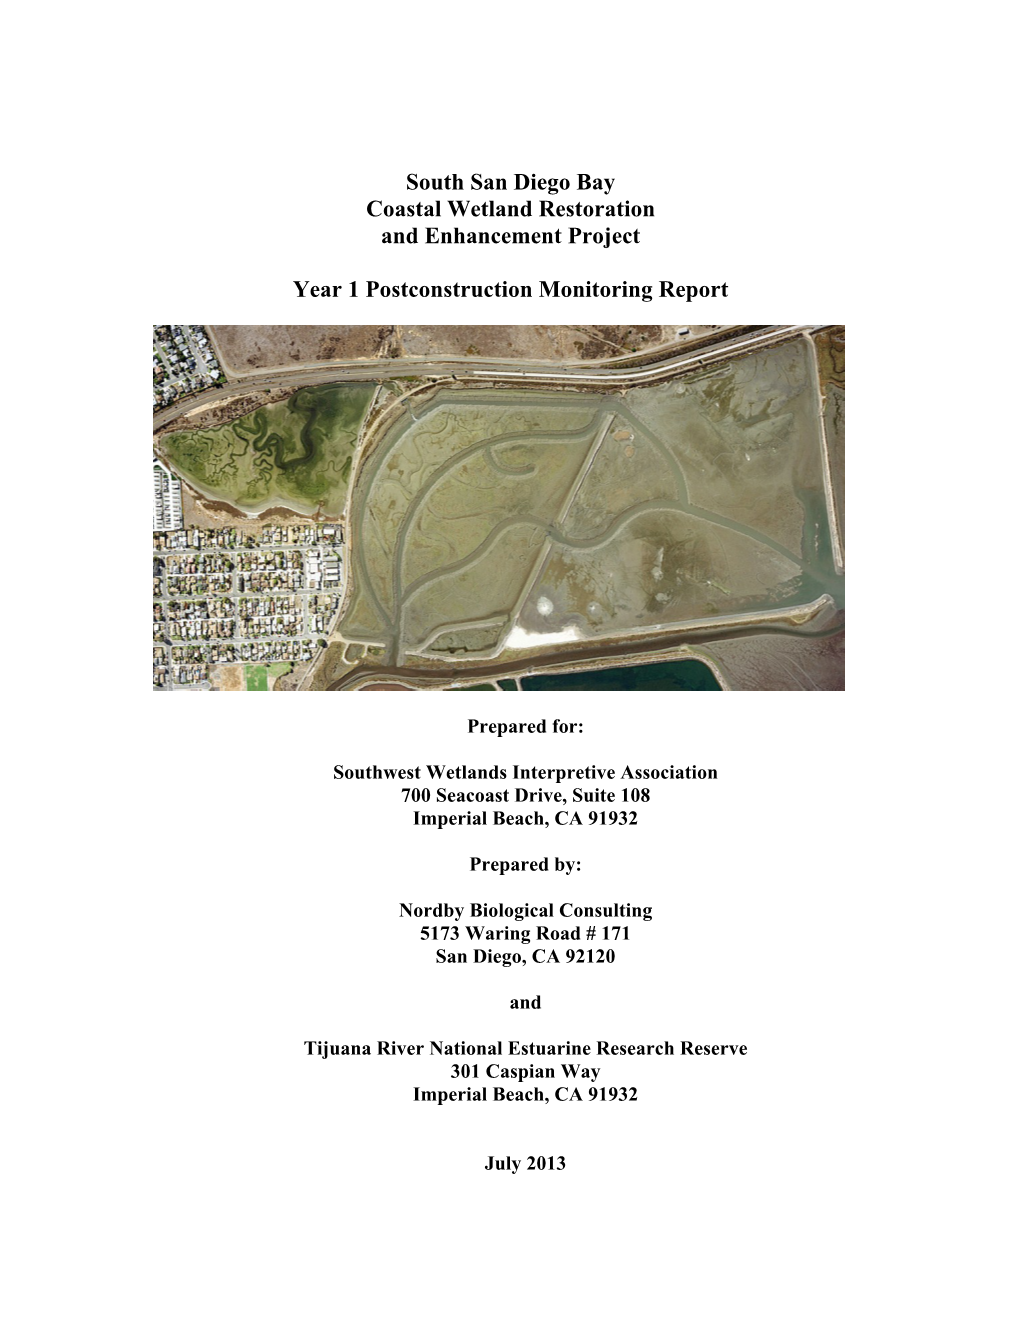 South San Diego Bay Coastal Wetland Restoration and Enhancement Project